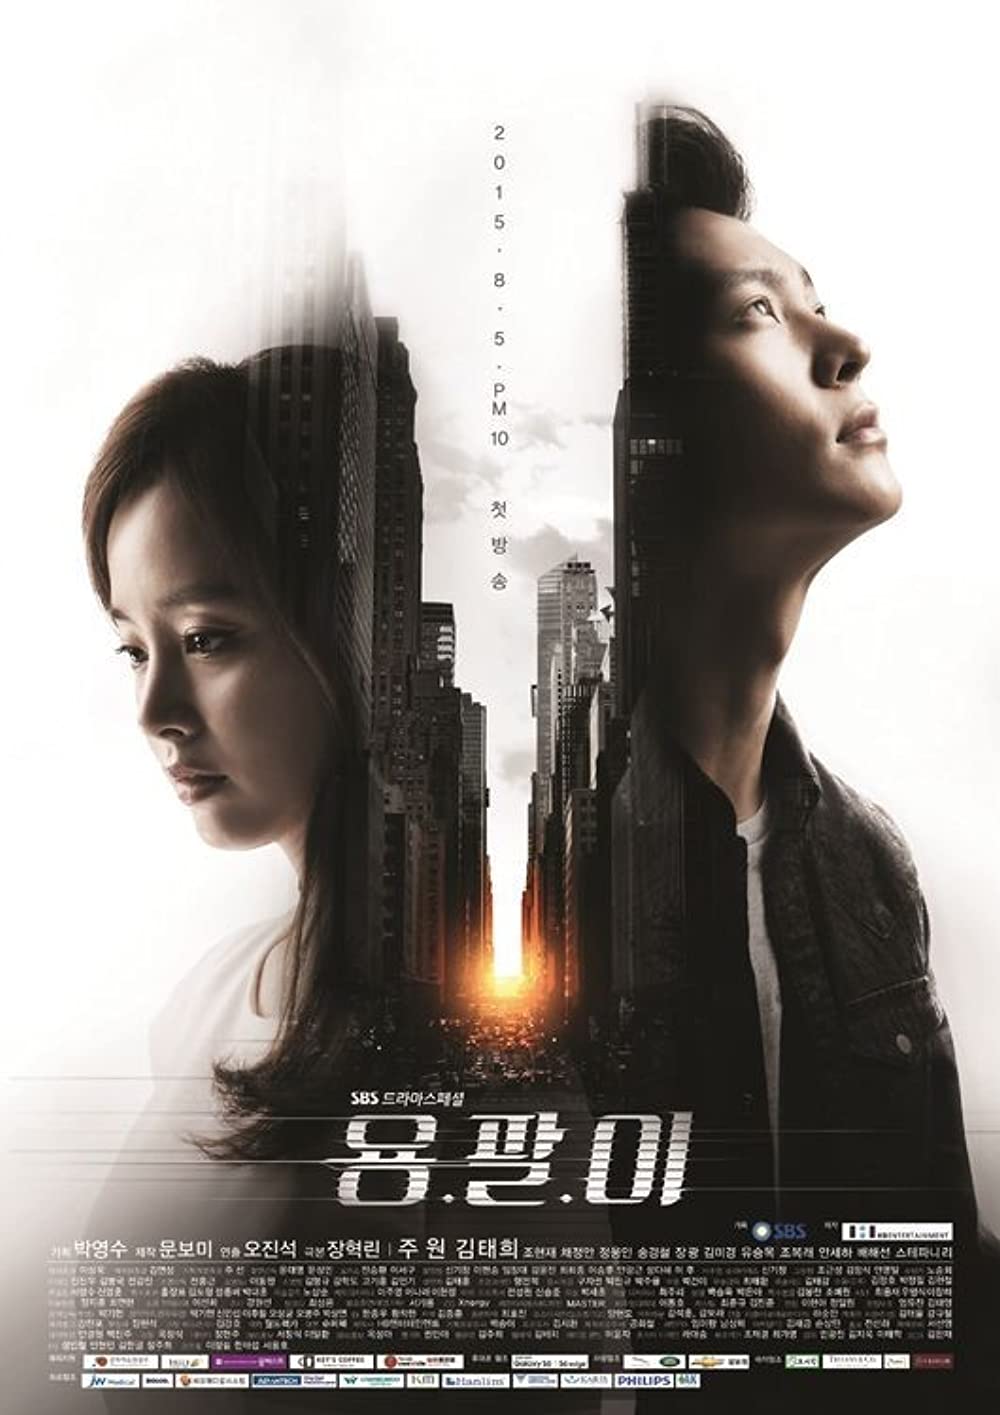 7 Drama Korea kisah rebutan kekuasaan kakak dan adik, penuh ketegangan